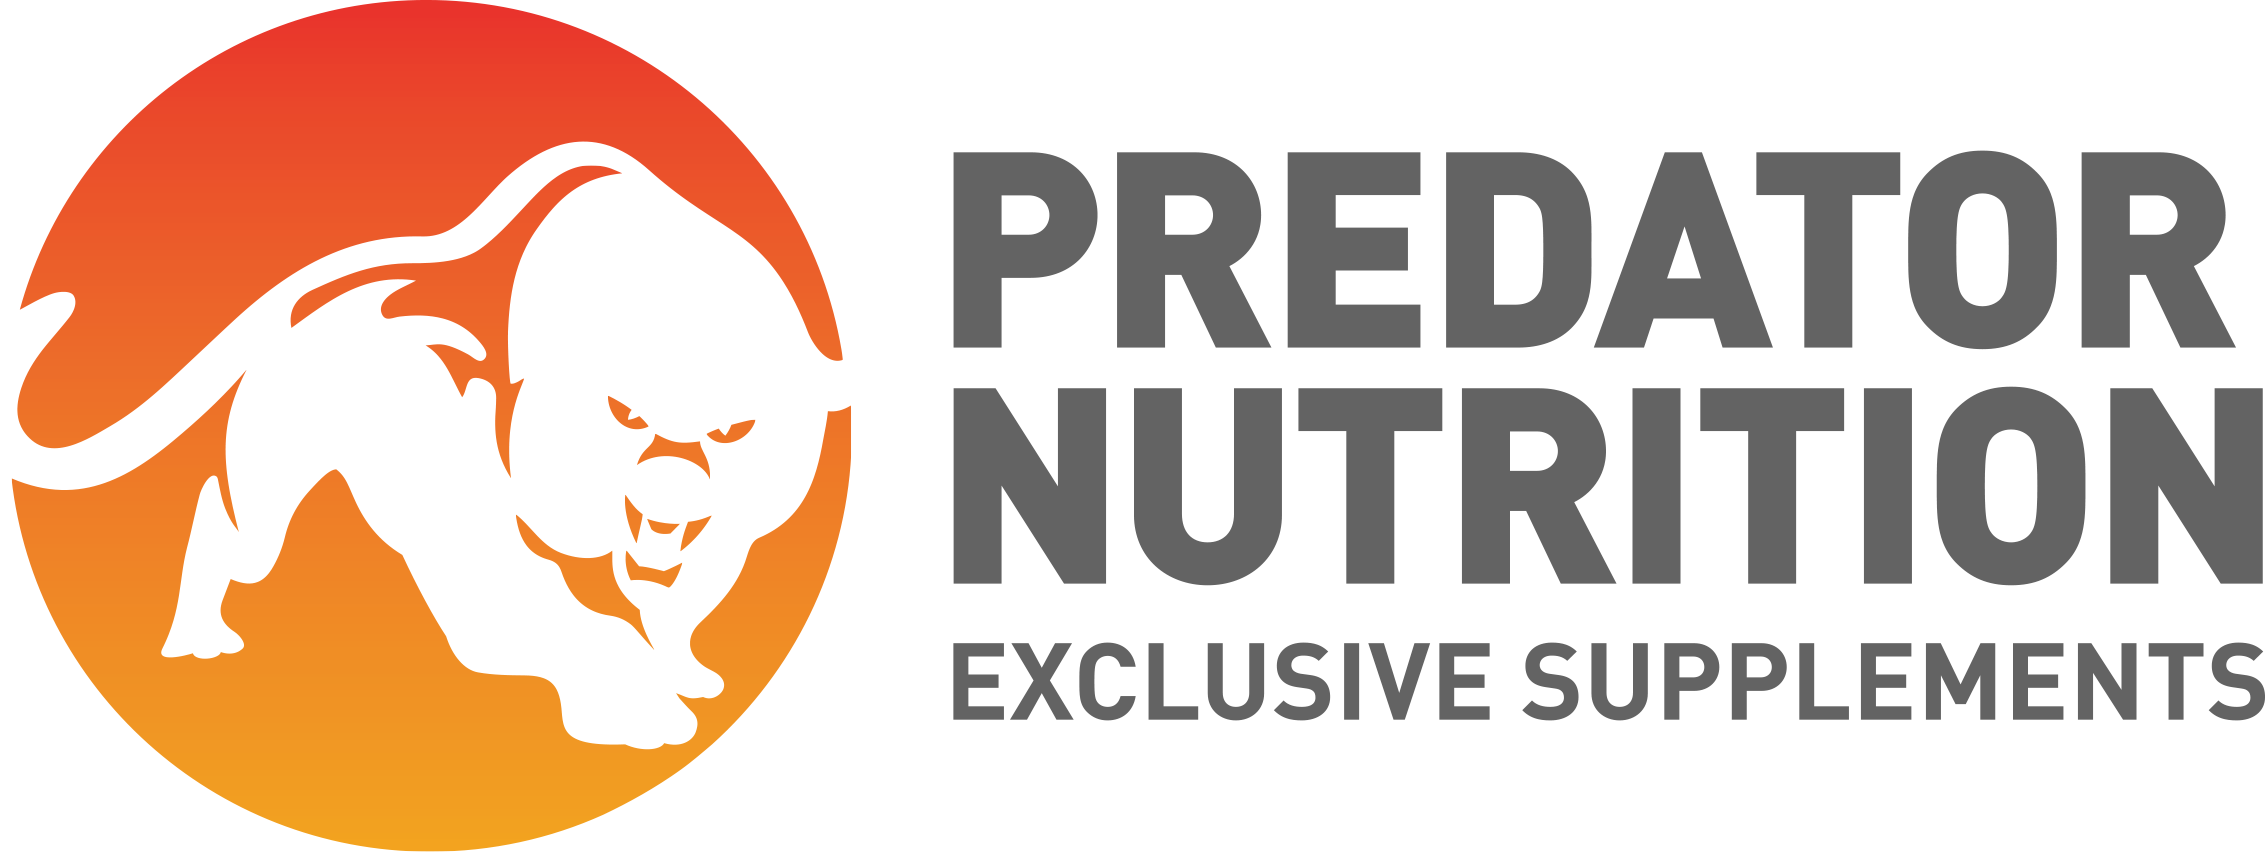 Predator Nutrition_logo